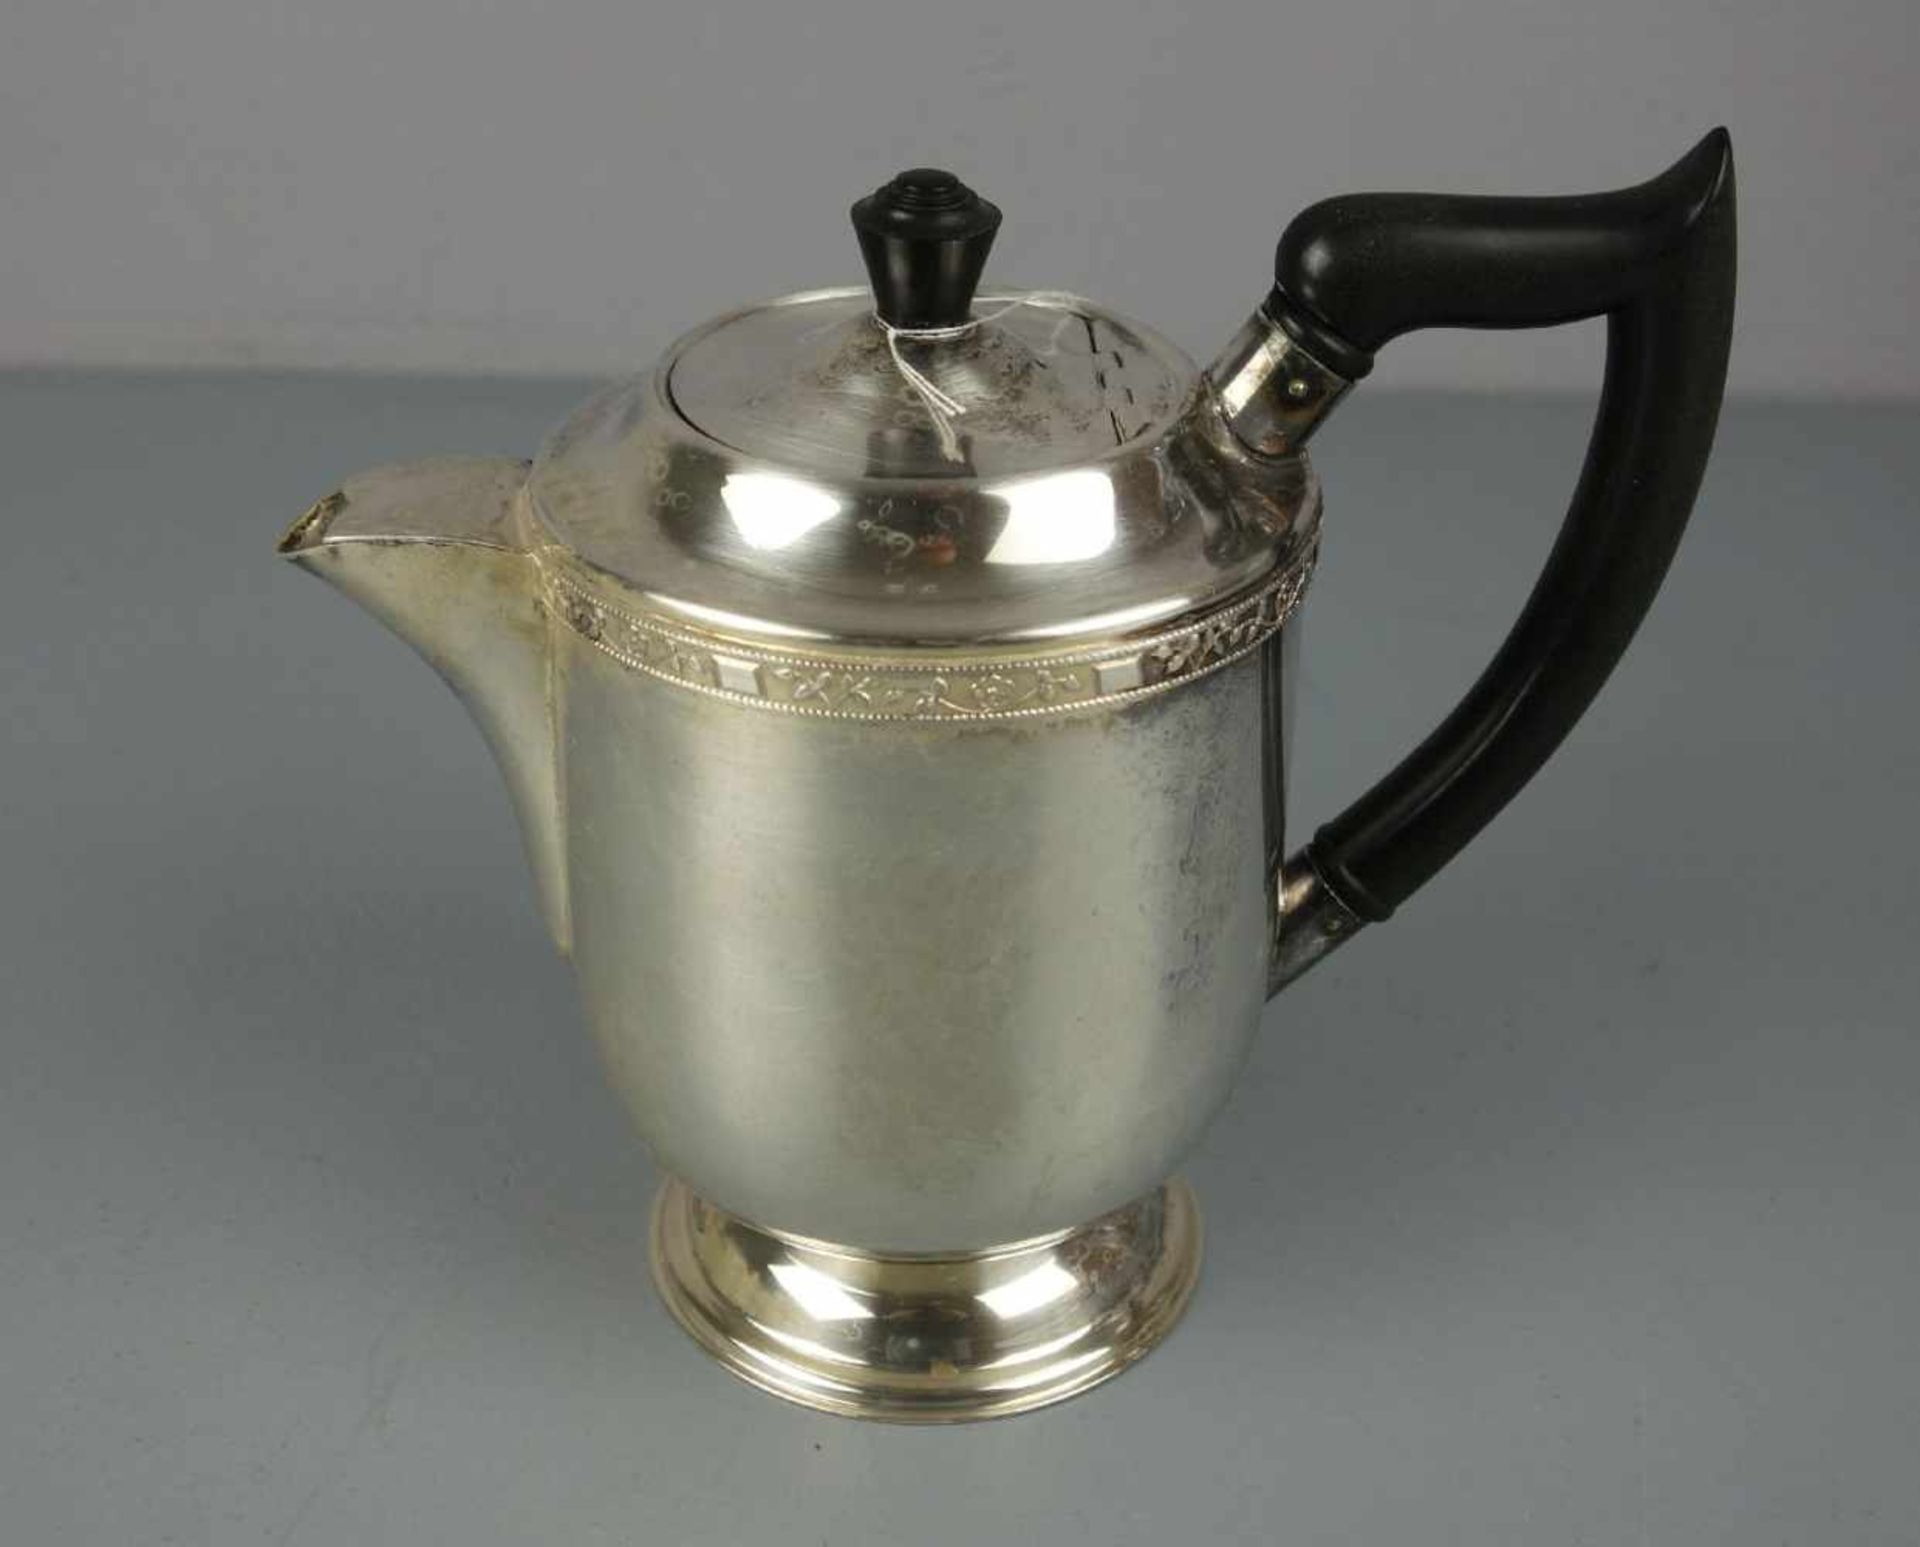 KAFFEEKANNE / KANNE / coffee pot, versilbertes Metall und Bakelit, 1. H. 20. Jh., England, unter dem - Image 3 of 5